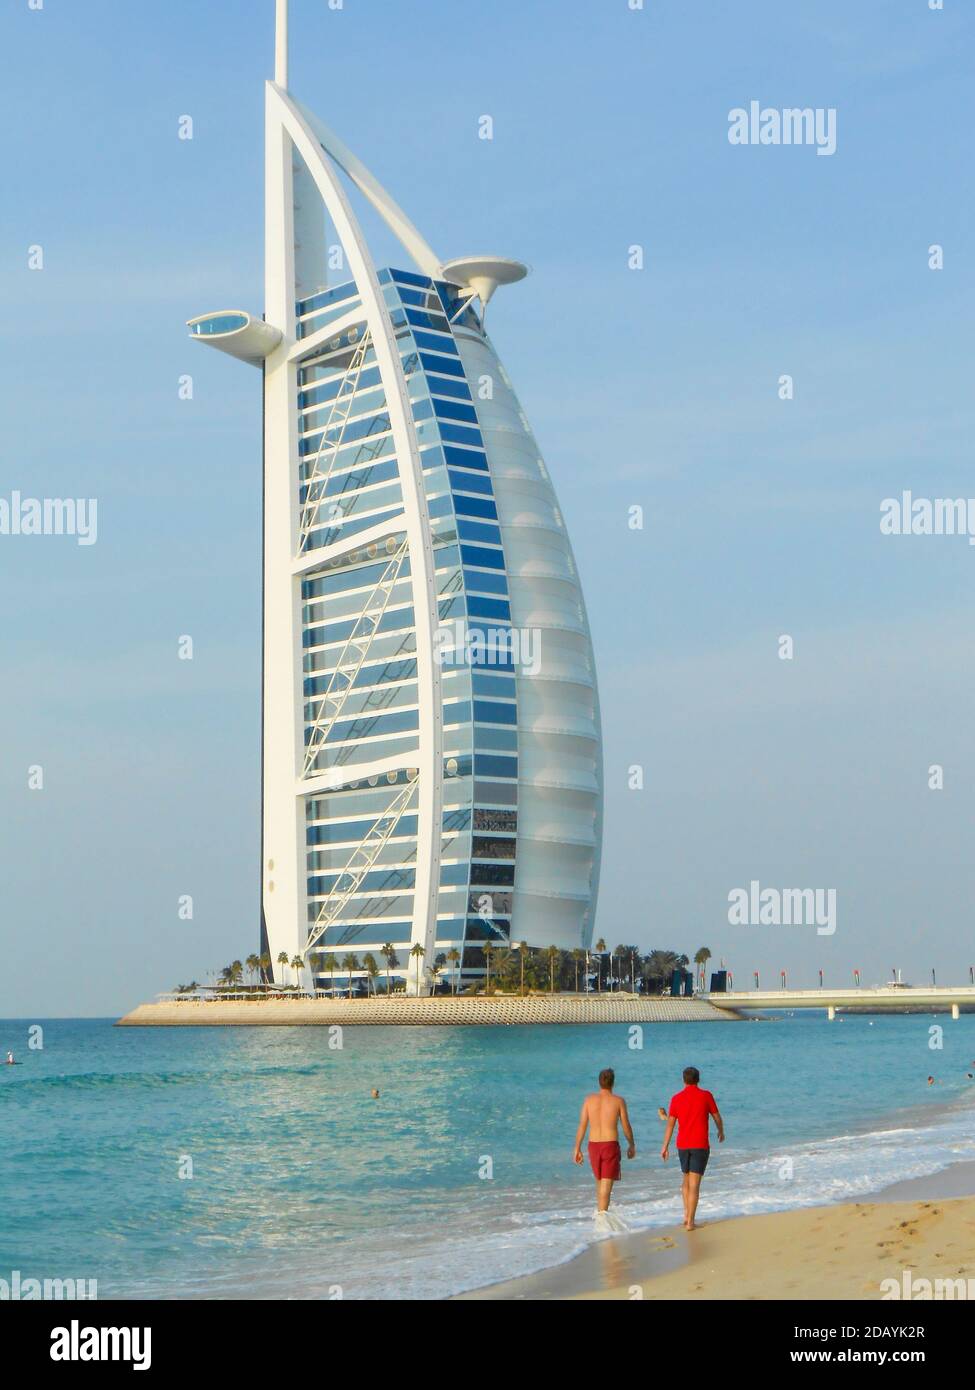 Two men stroll on the beach in front of the Burj Al Arab building in Dubai UAE Stock Photo